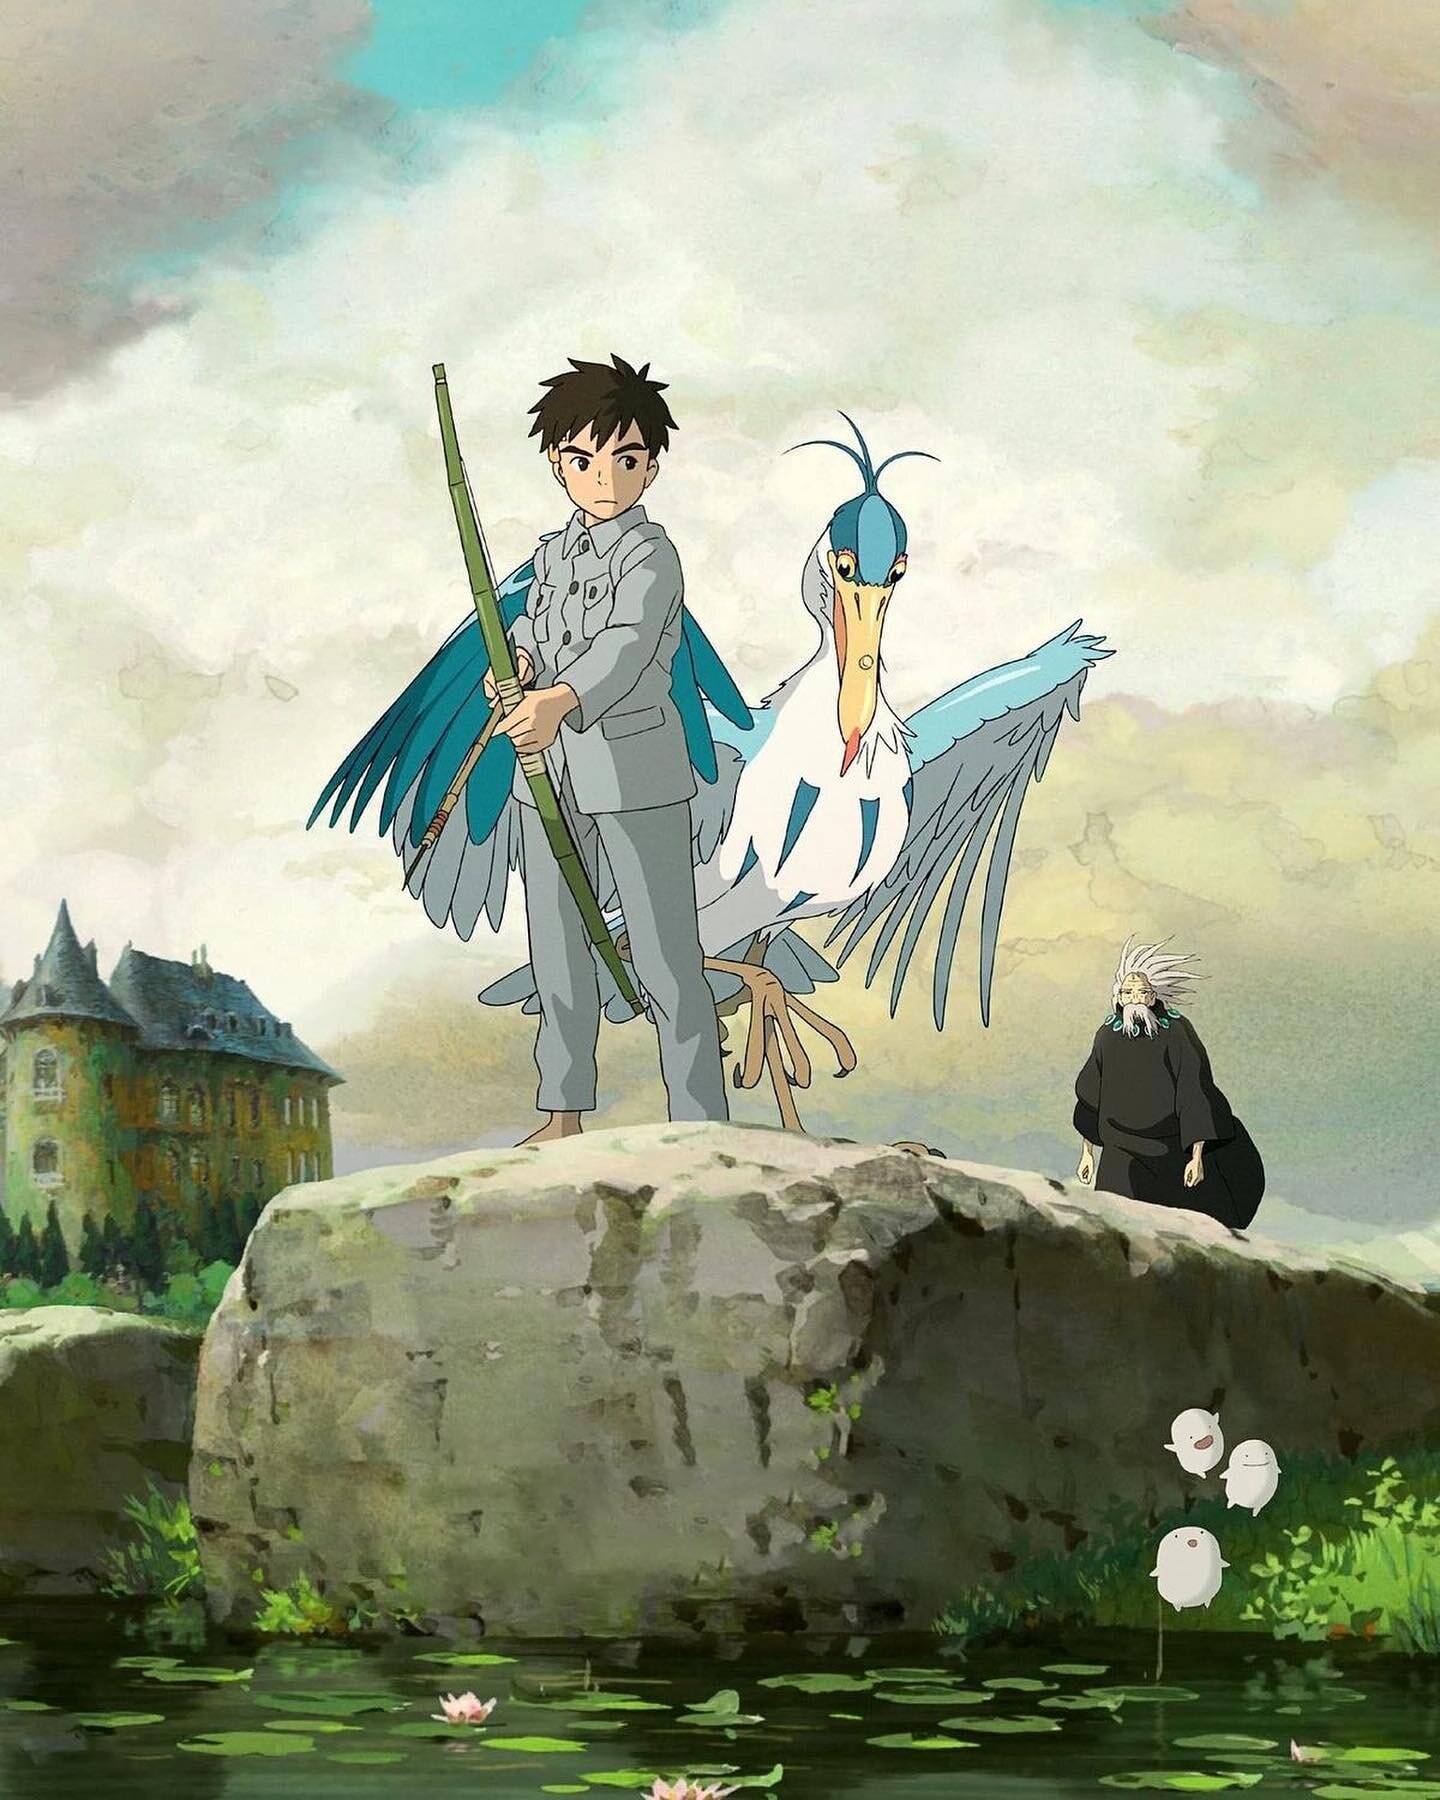 Congrats to THE #HayaoMiyazaki for winning his 2nd Oscar for Best Animated Film for #TheBoyandTheHeron 🏆🔥

In honor of his Academy Award, let us know your favorite #StudioGhibli film 👇🏽

#spiritedaway #myneighbortotoro #princessmononoke #ponyo #w